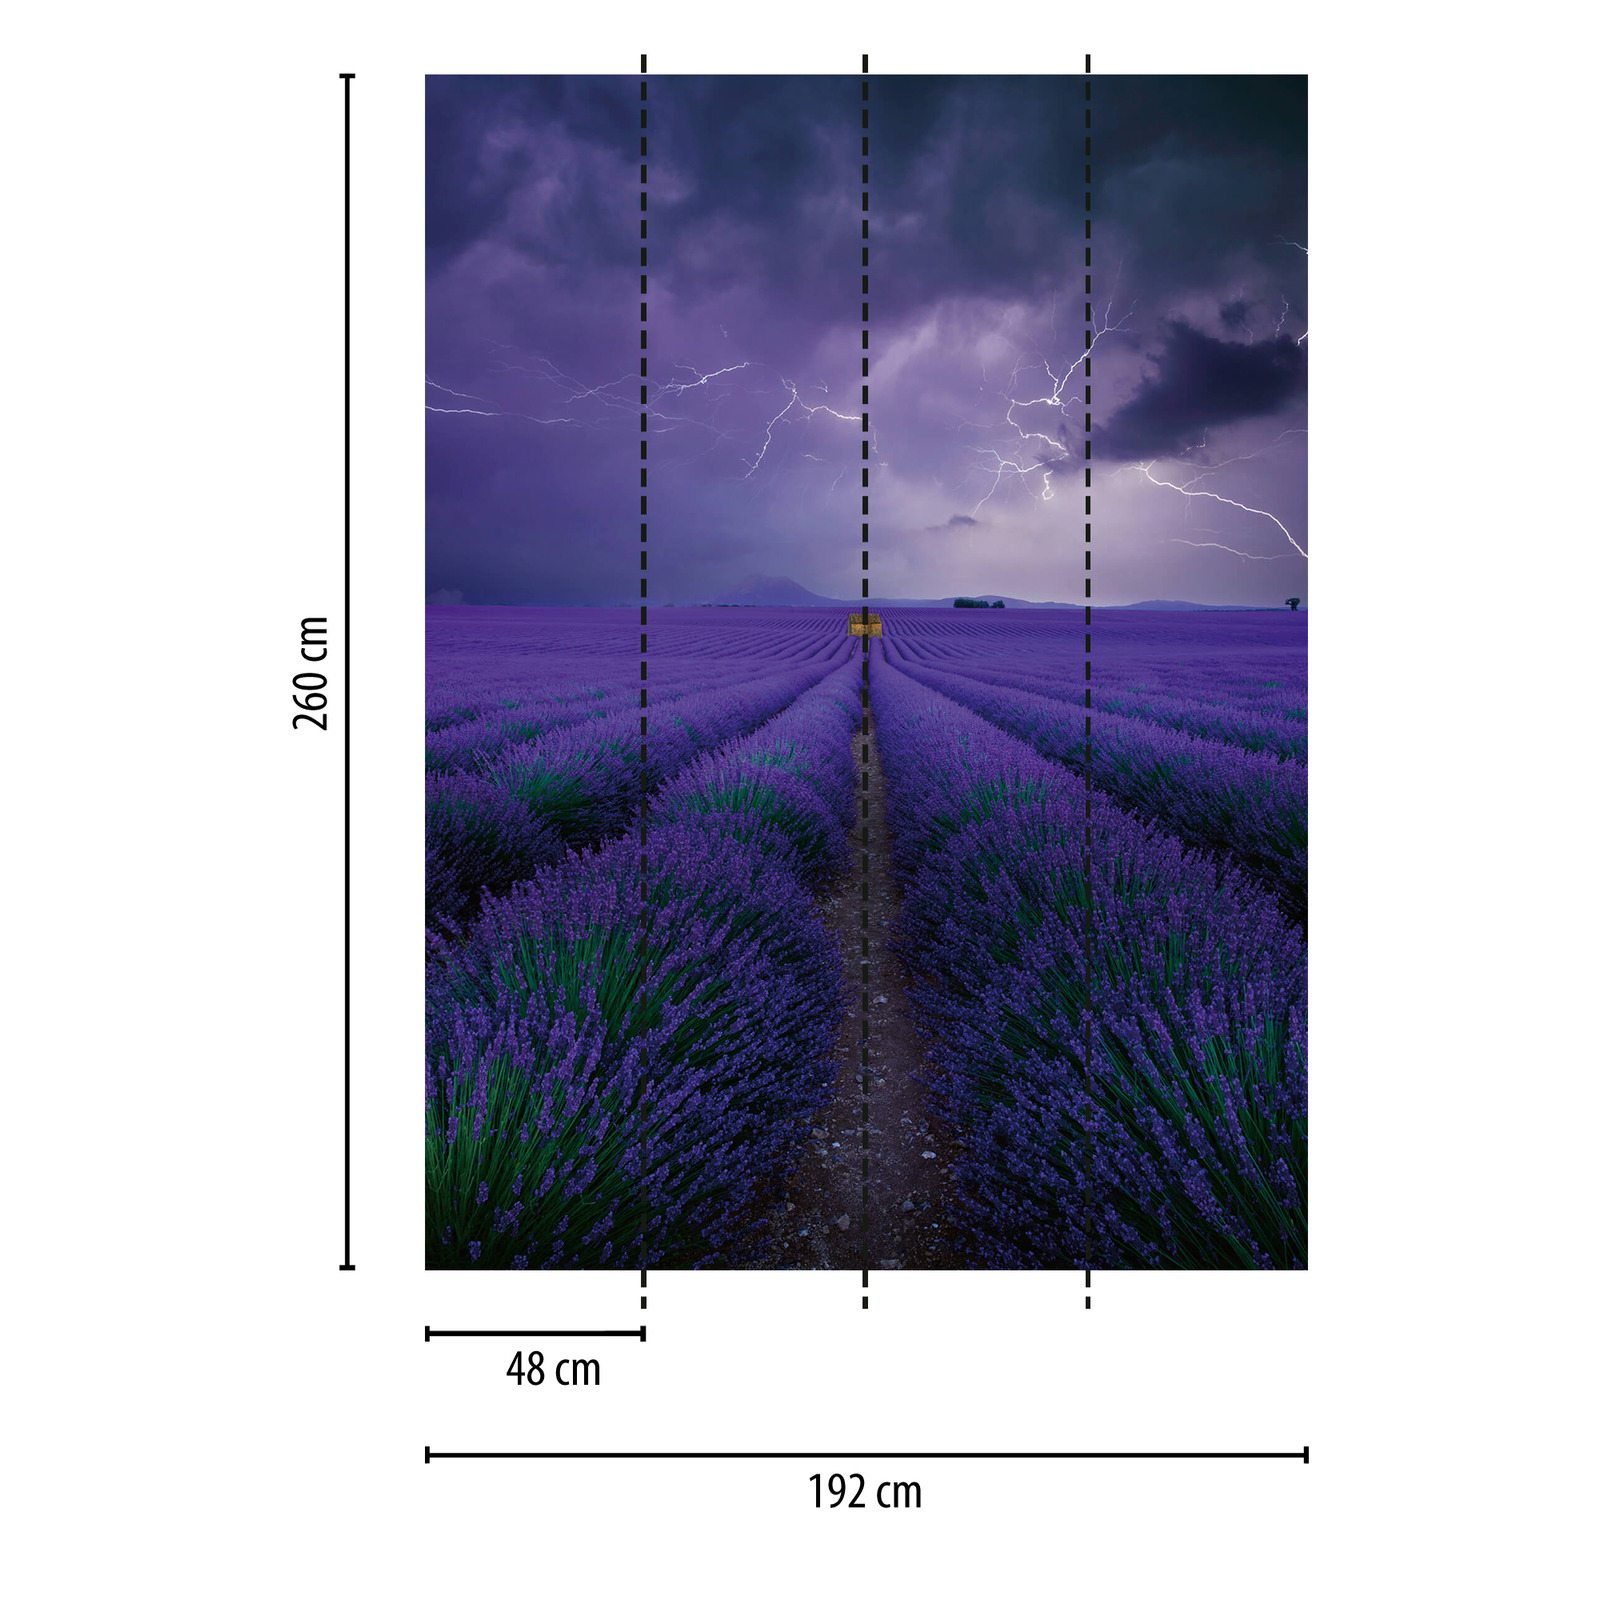             Fototapete Feld mit Lavendel – Violett, Grün, Braun
        